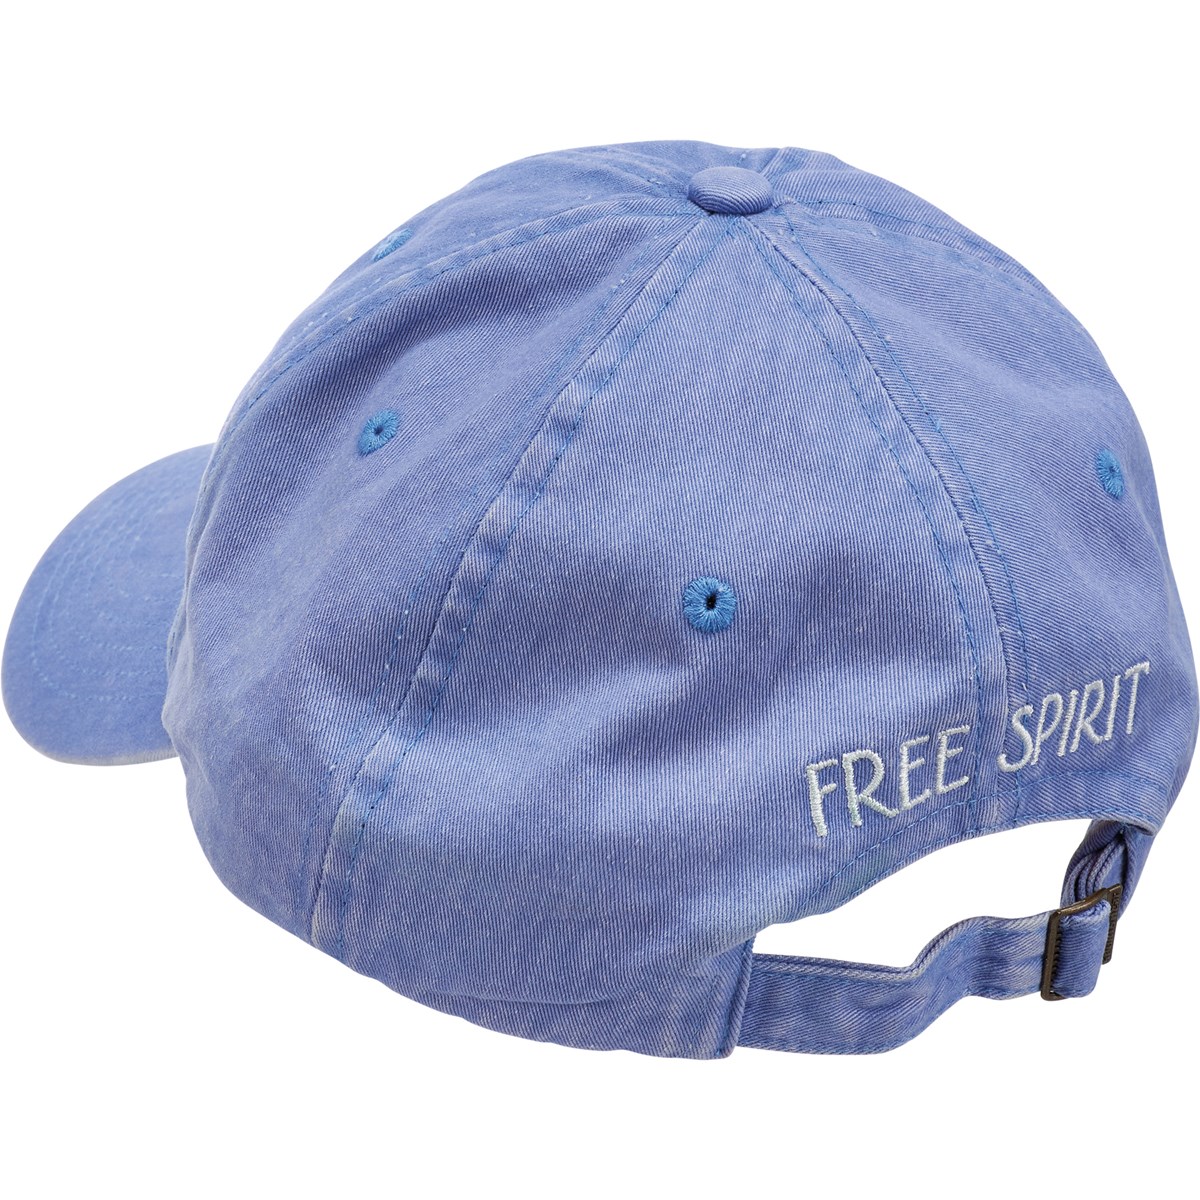 Baseball Cap - Free Spirit - One Size Fits Most - Cotton, Metal